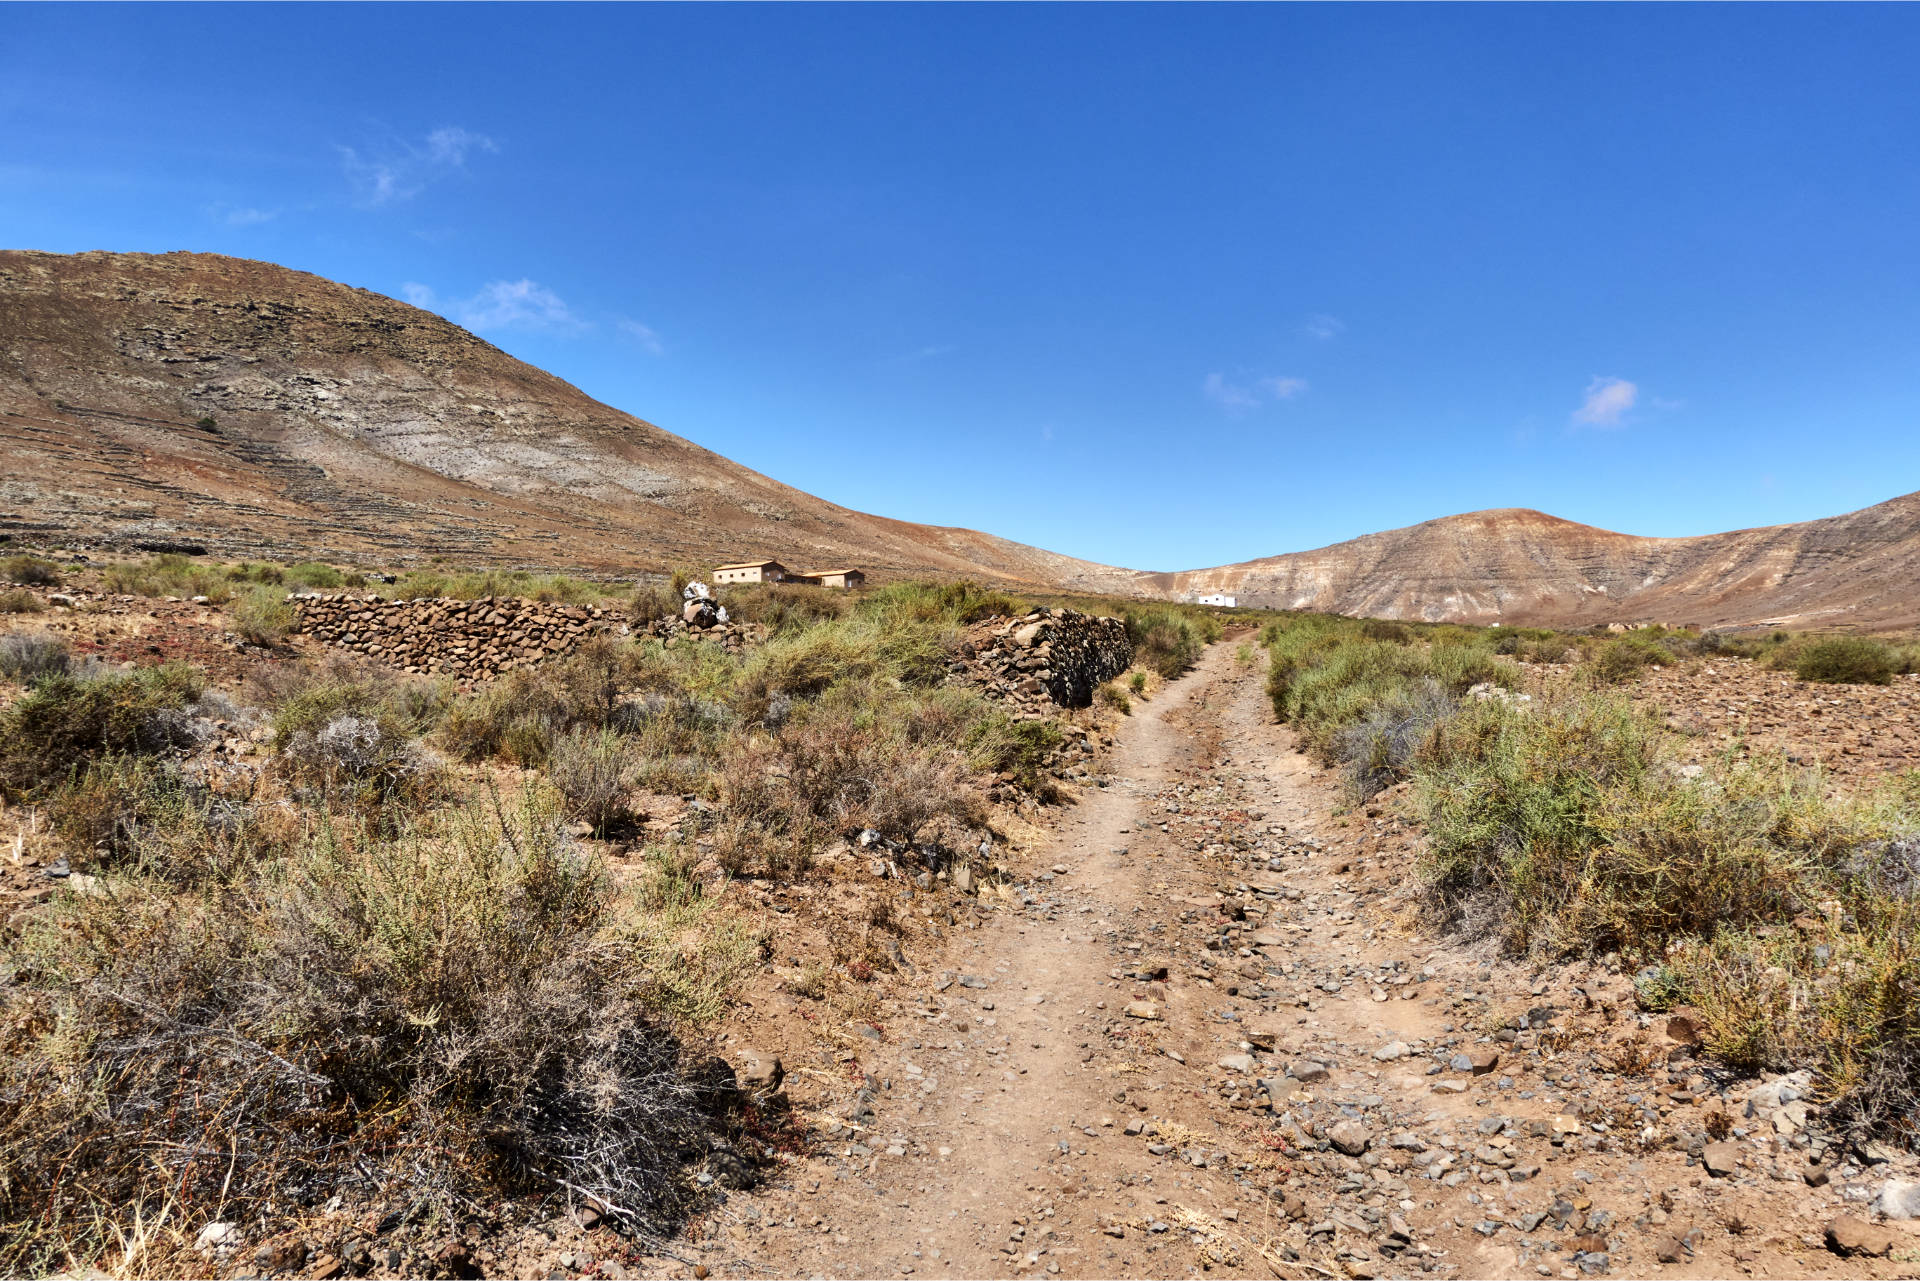 Durch das Valle de Tetir Richtung Westen zum namenlosen Pass zwischen Morro de Facay (520m) und Morro de Cagadas Blandas (525m).